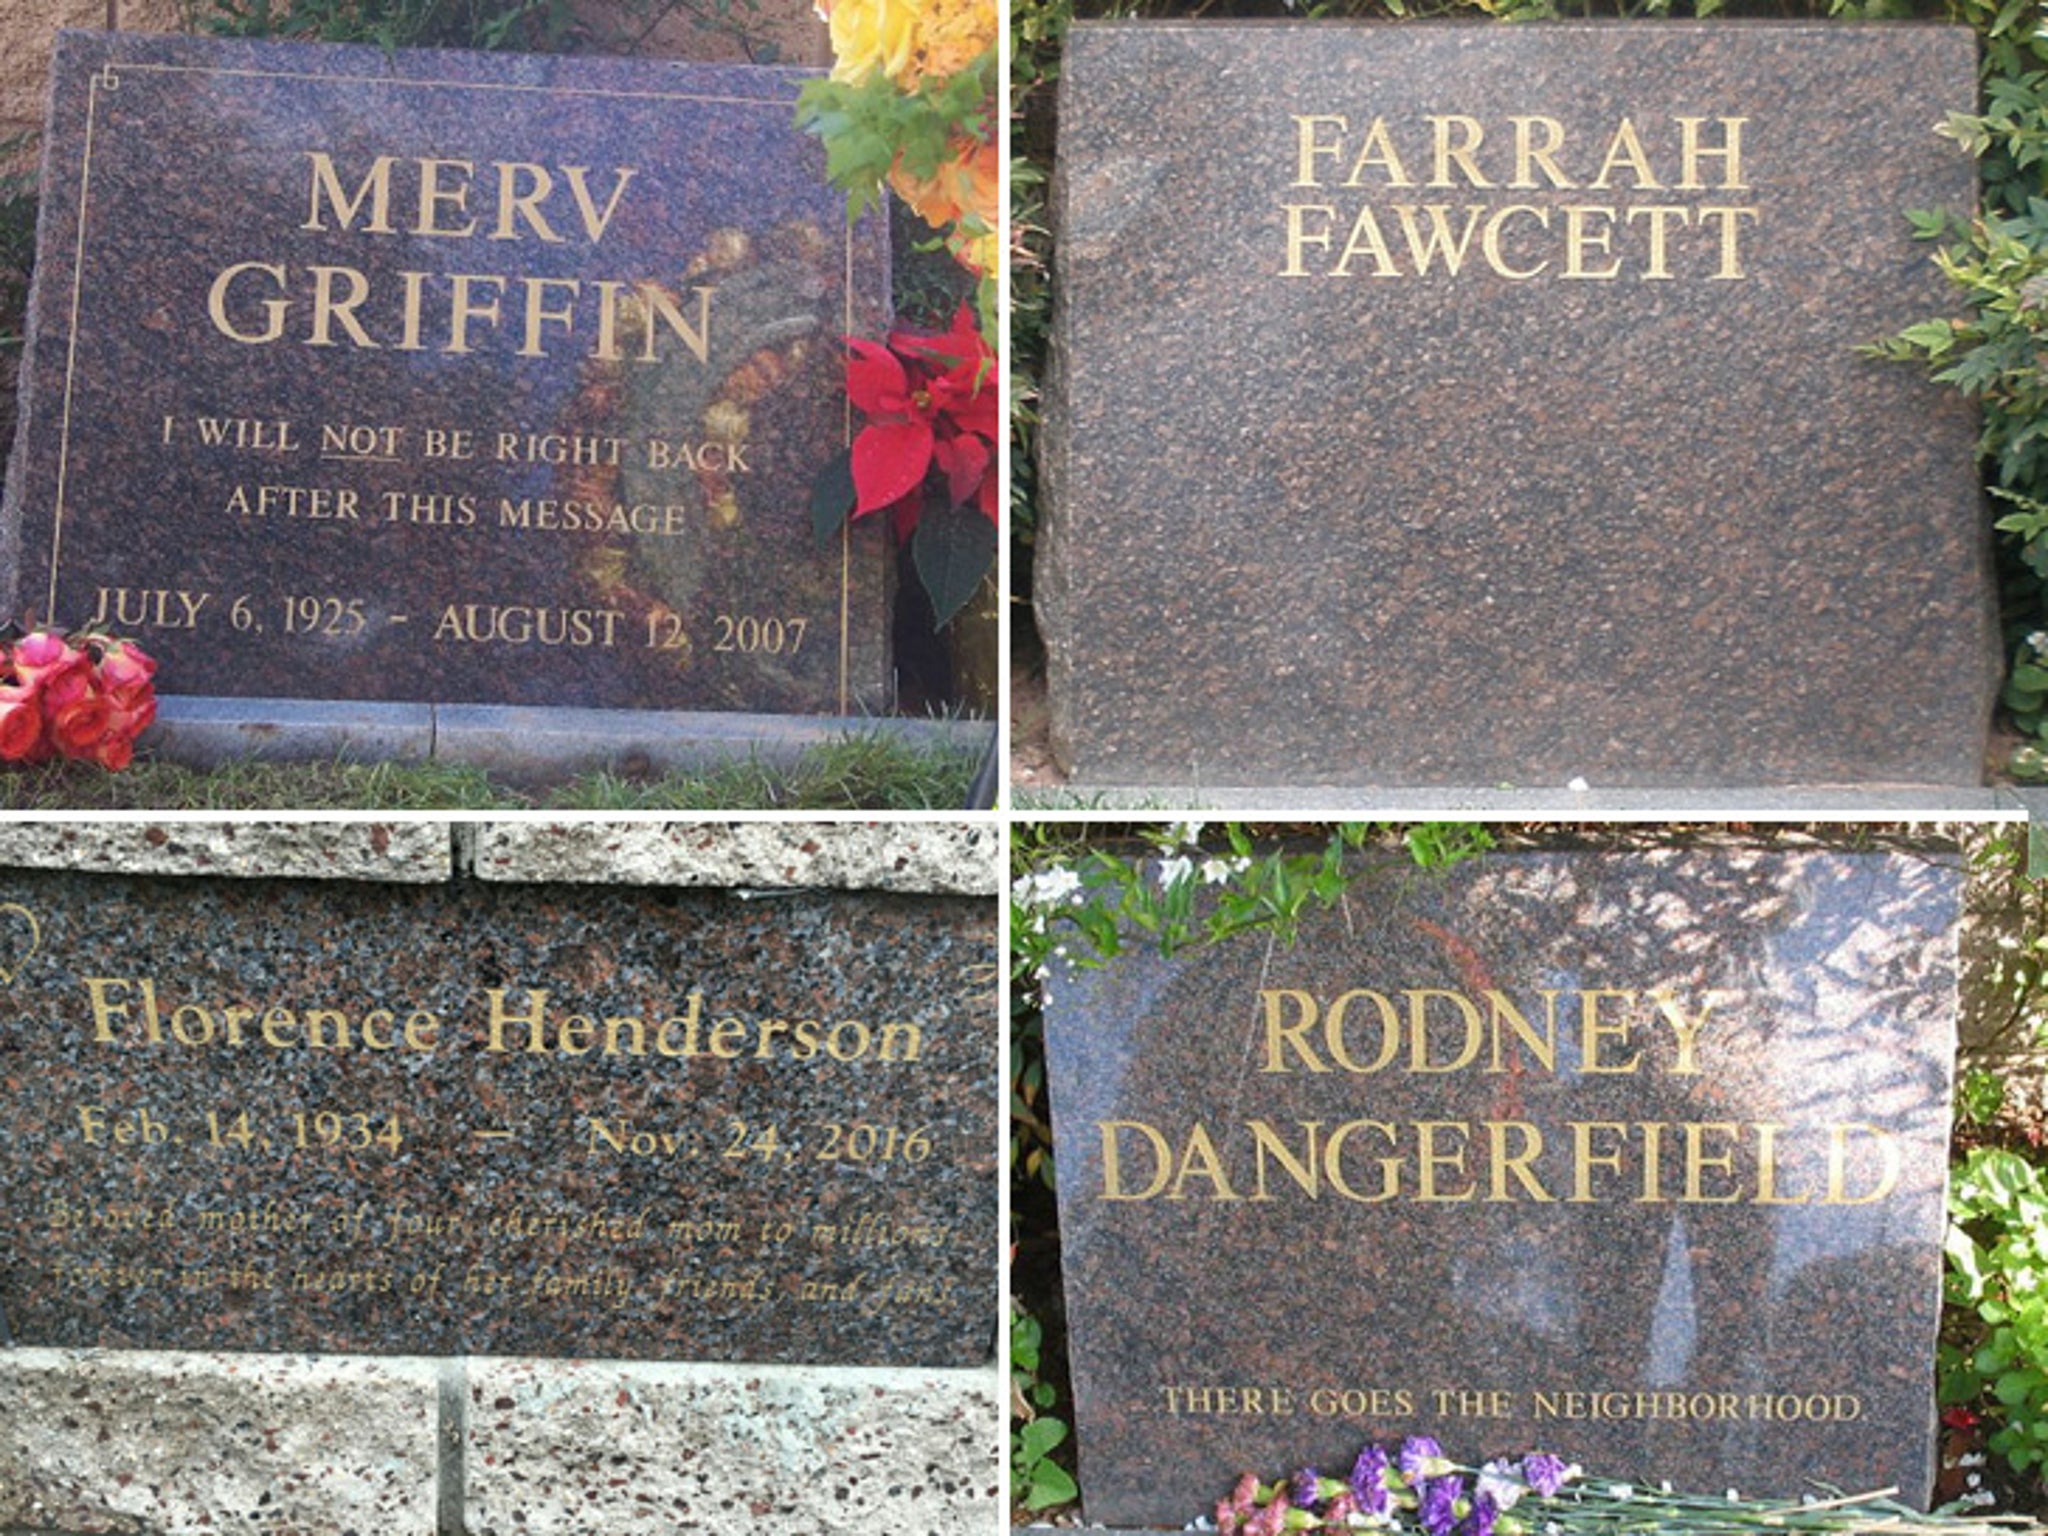 Rodney Dangerfield's grave (photo)